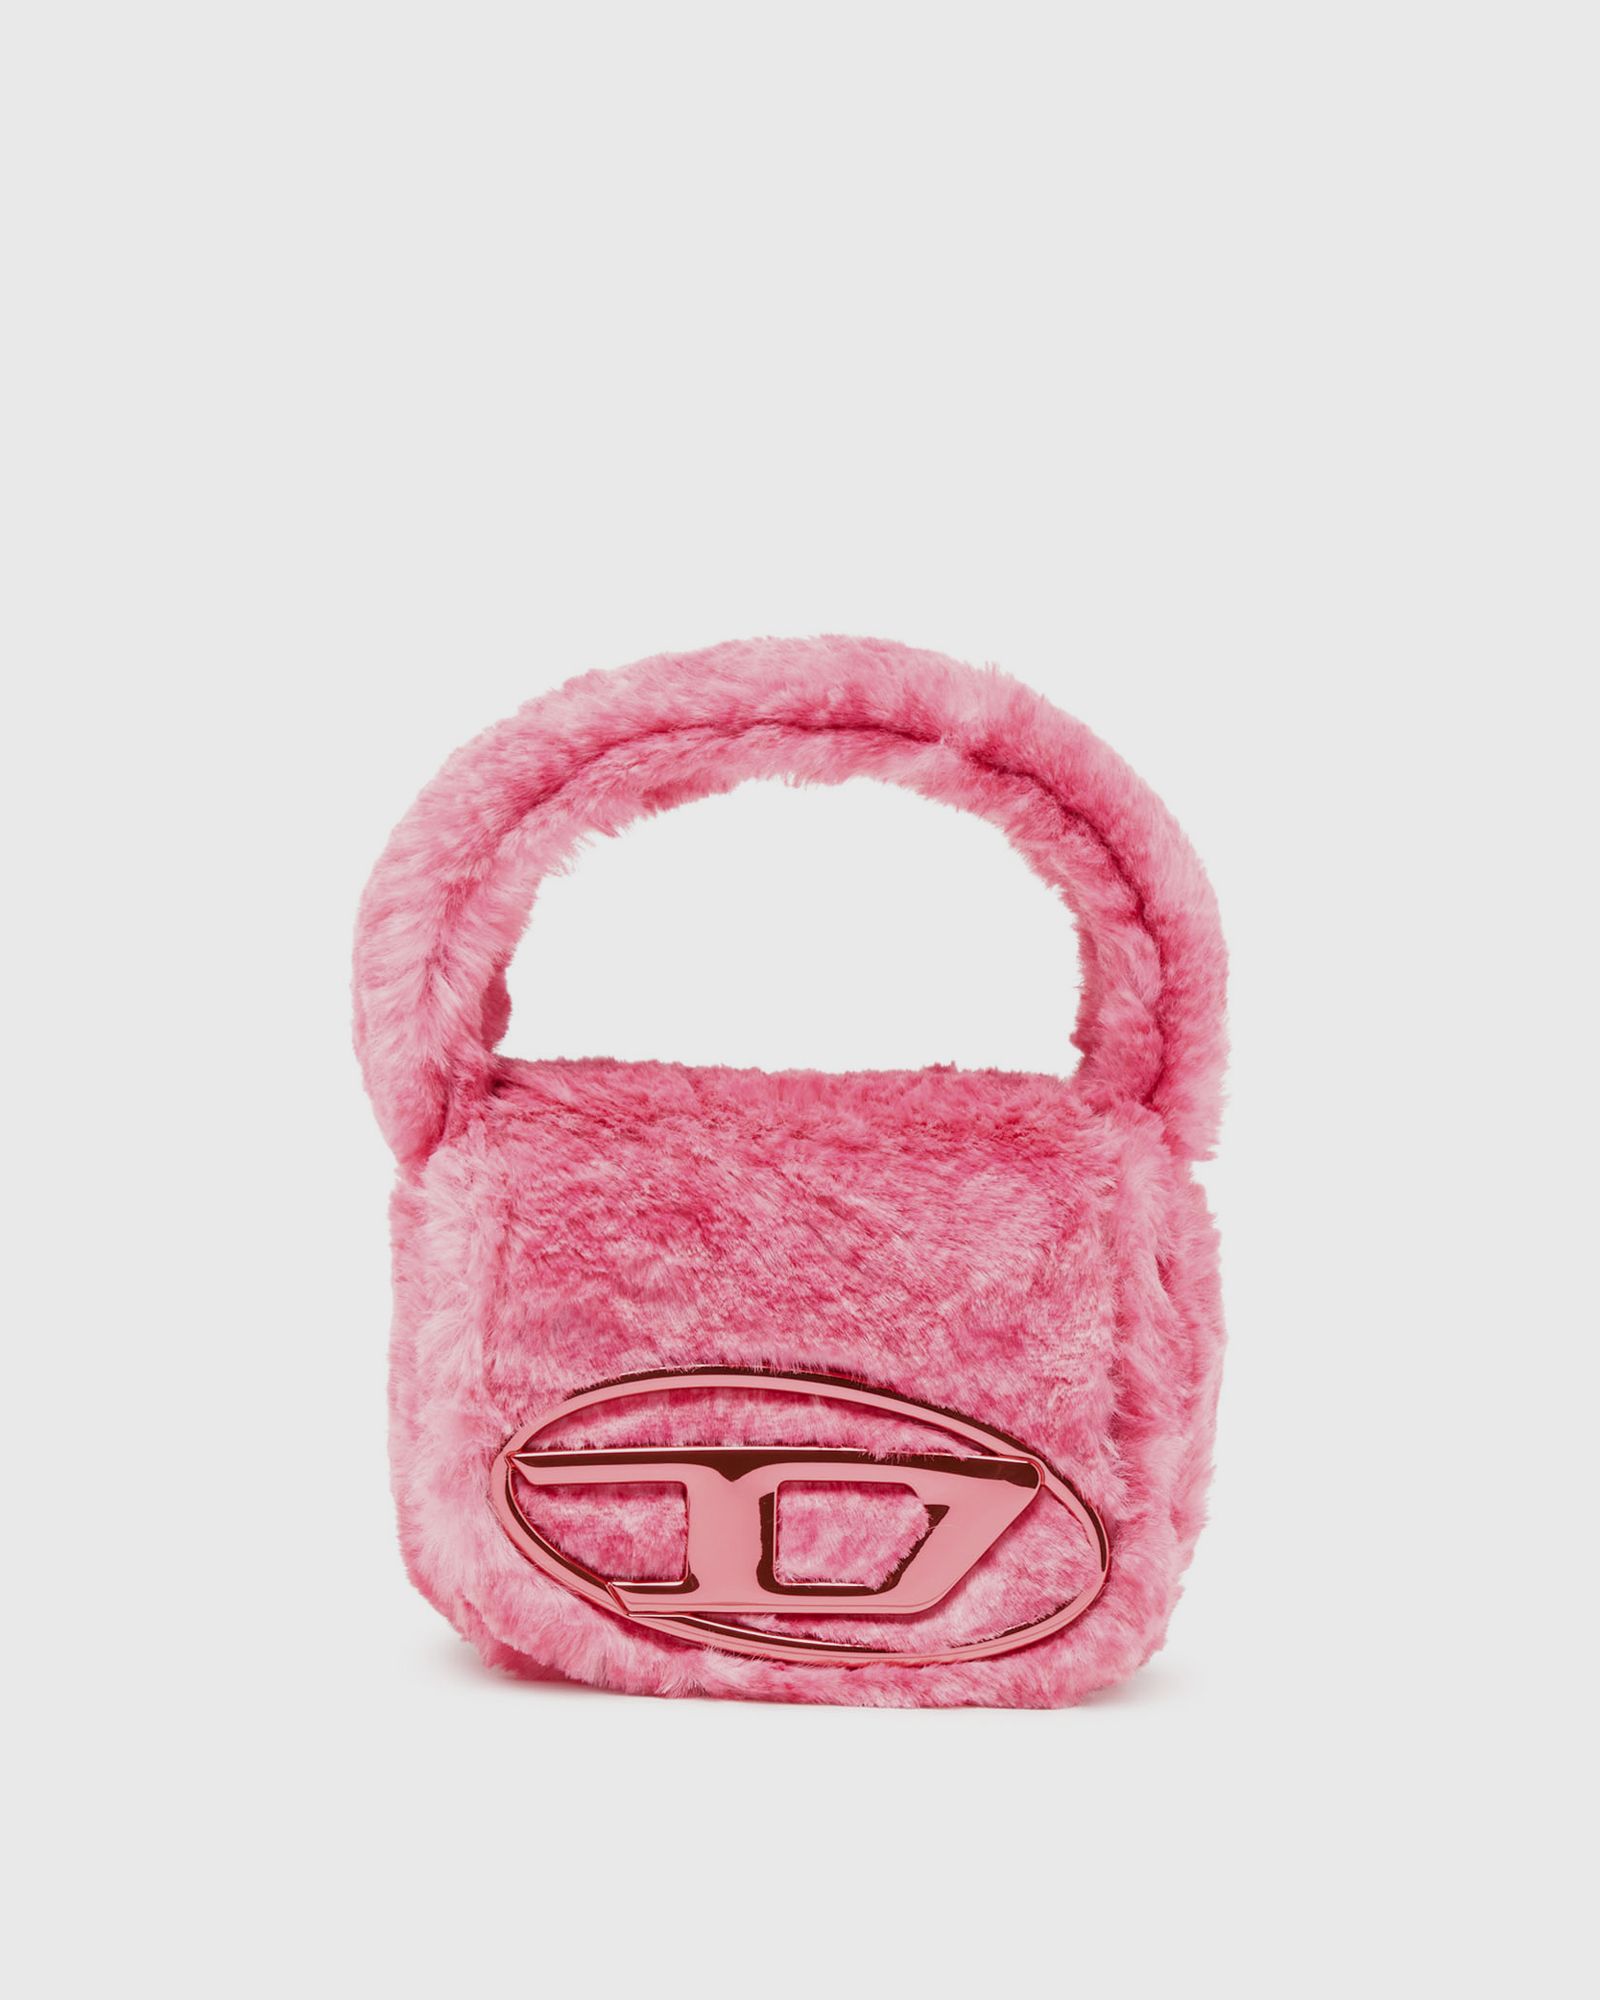 Diesel - 1dr 1dr xs cross bodybag women handbags pink in größe:one size